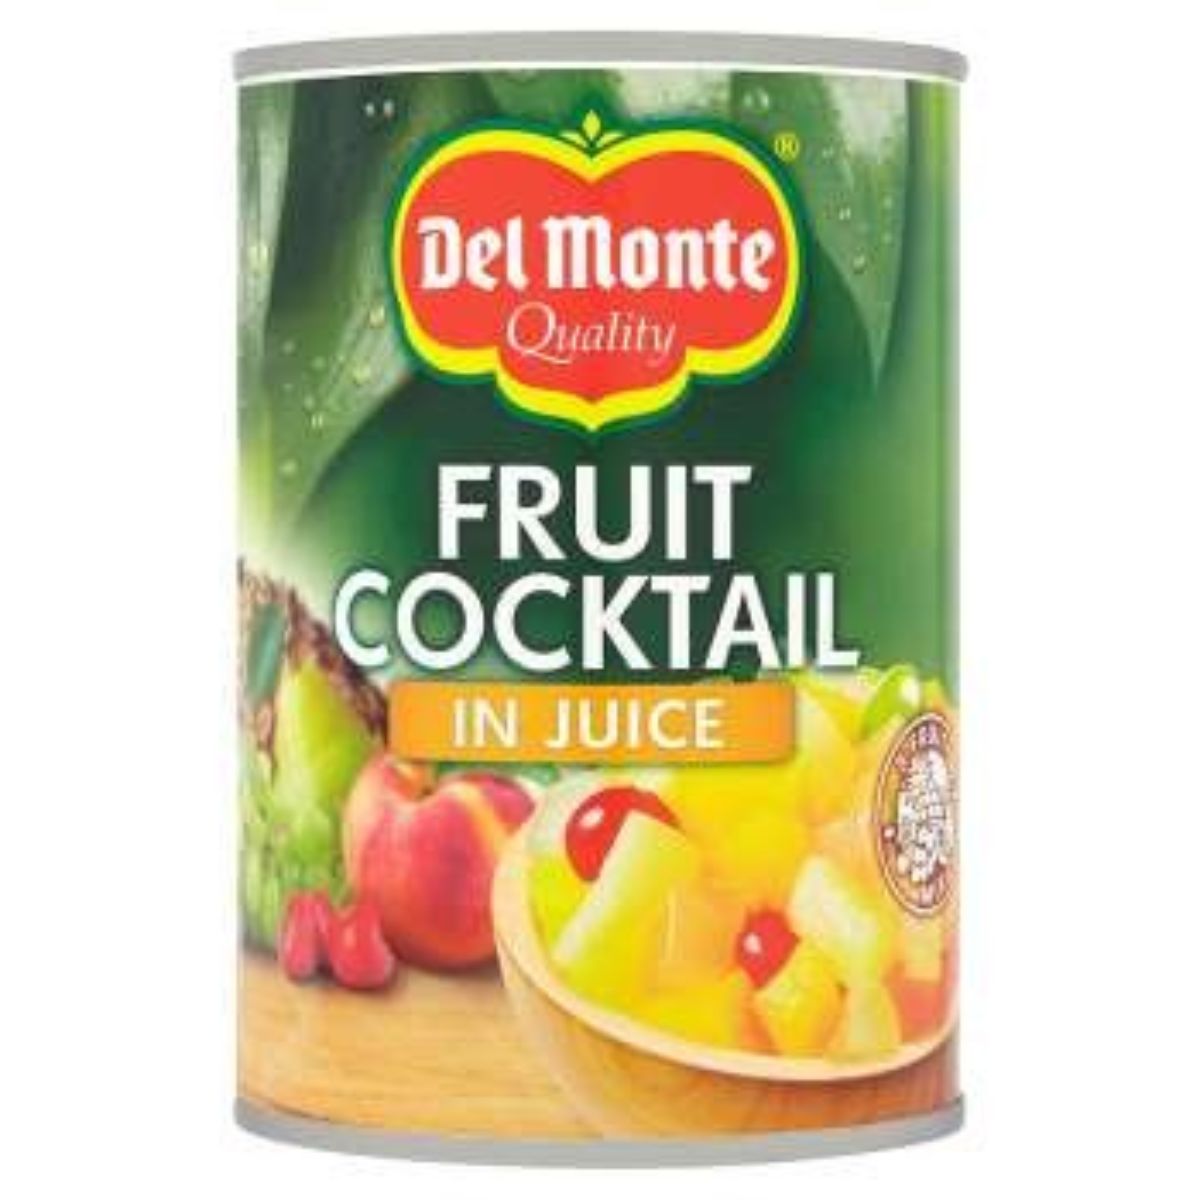 Del Monte - Fruit Cocktail in Juice - 415g.